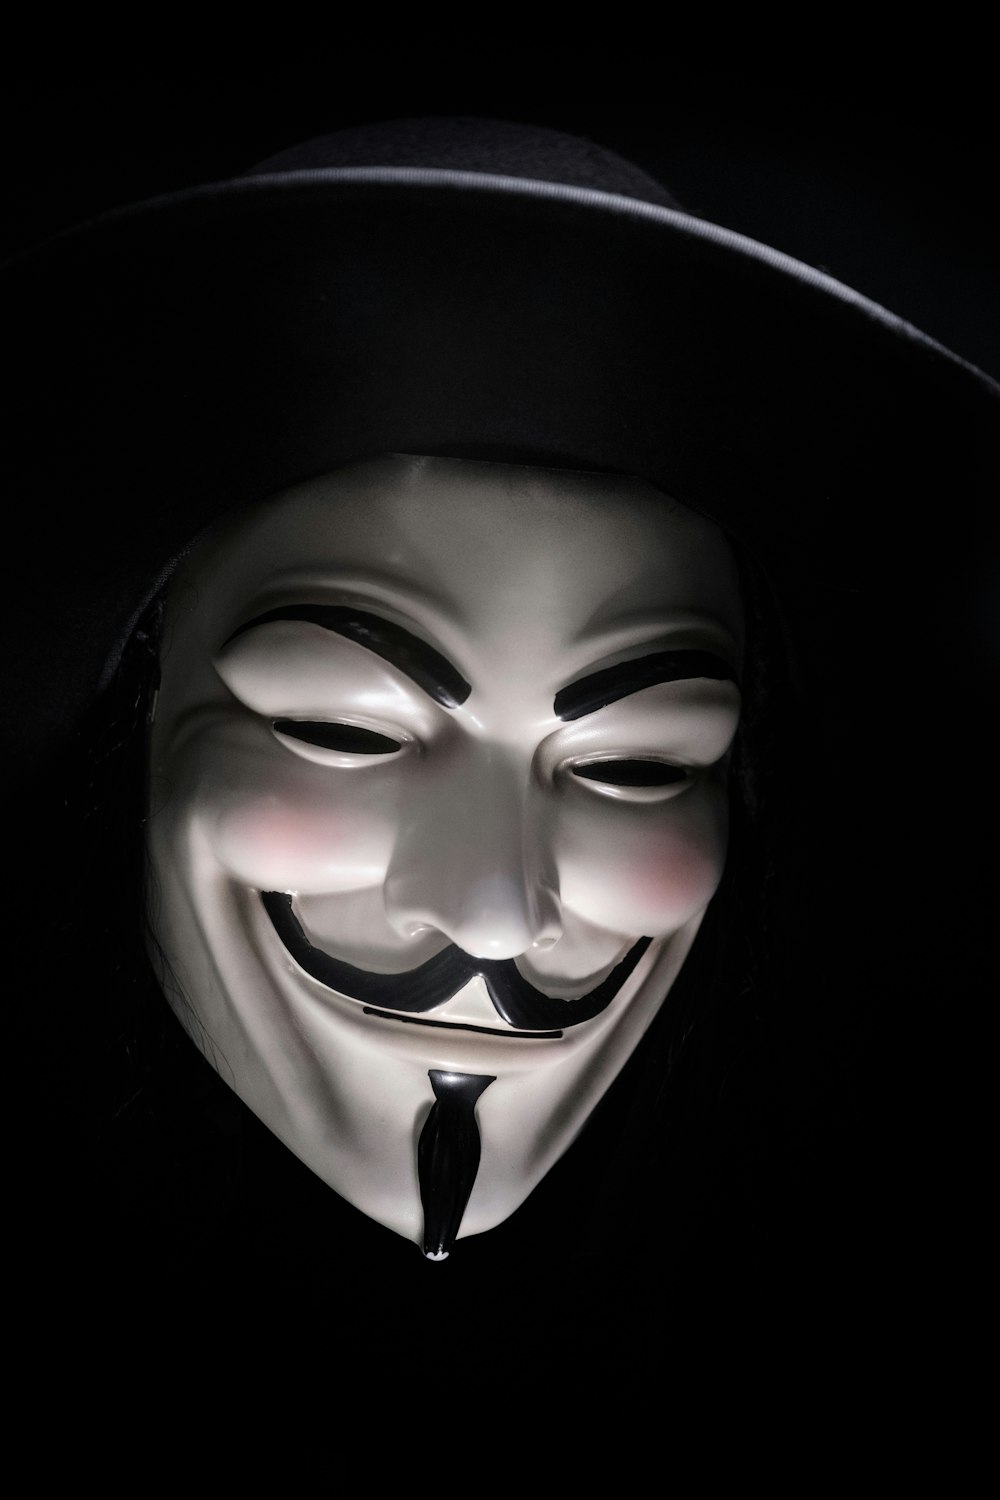 Hacker Mask Pictures | Download Free Images on Unsplash